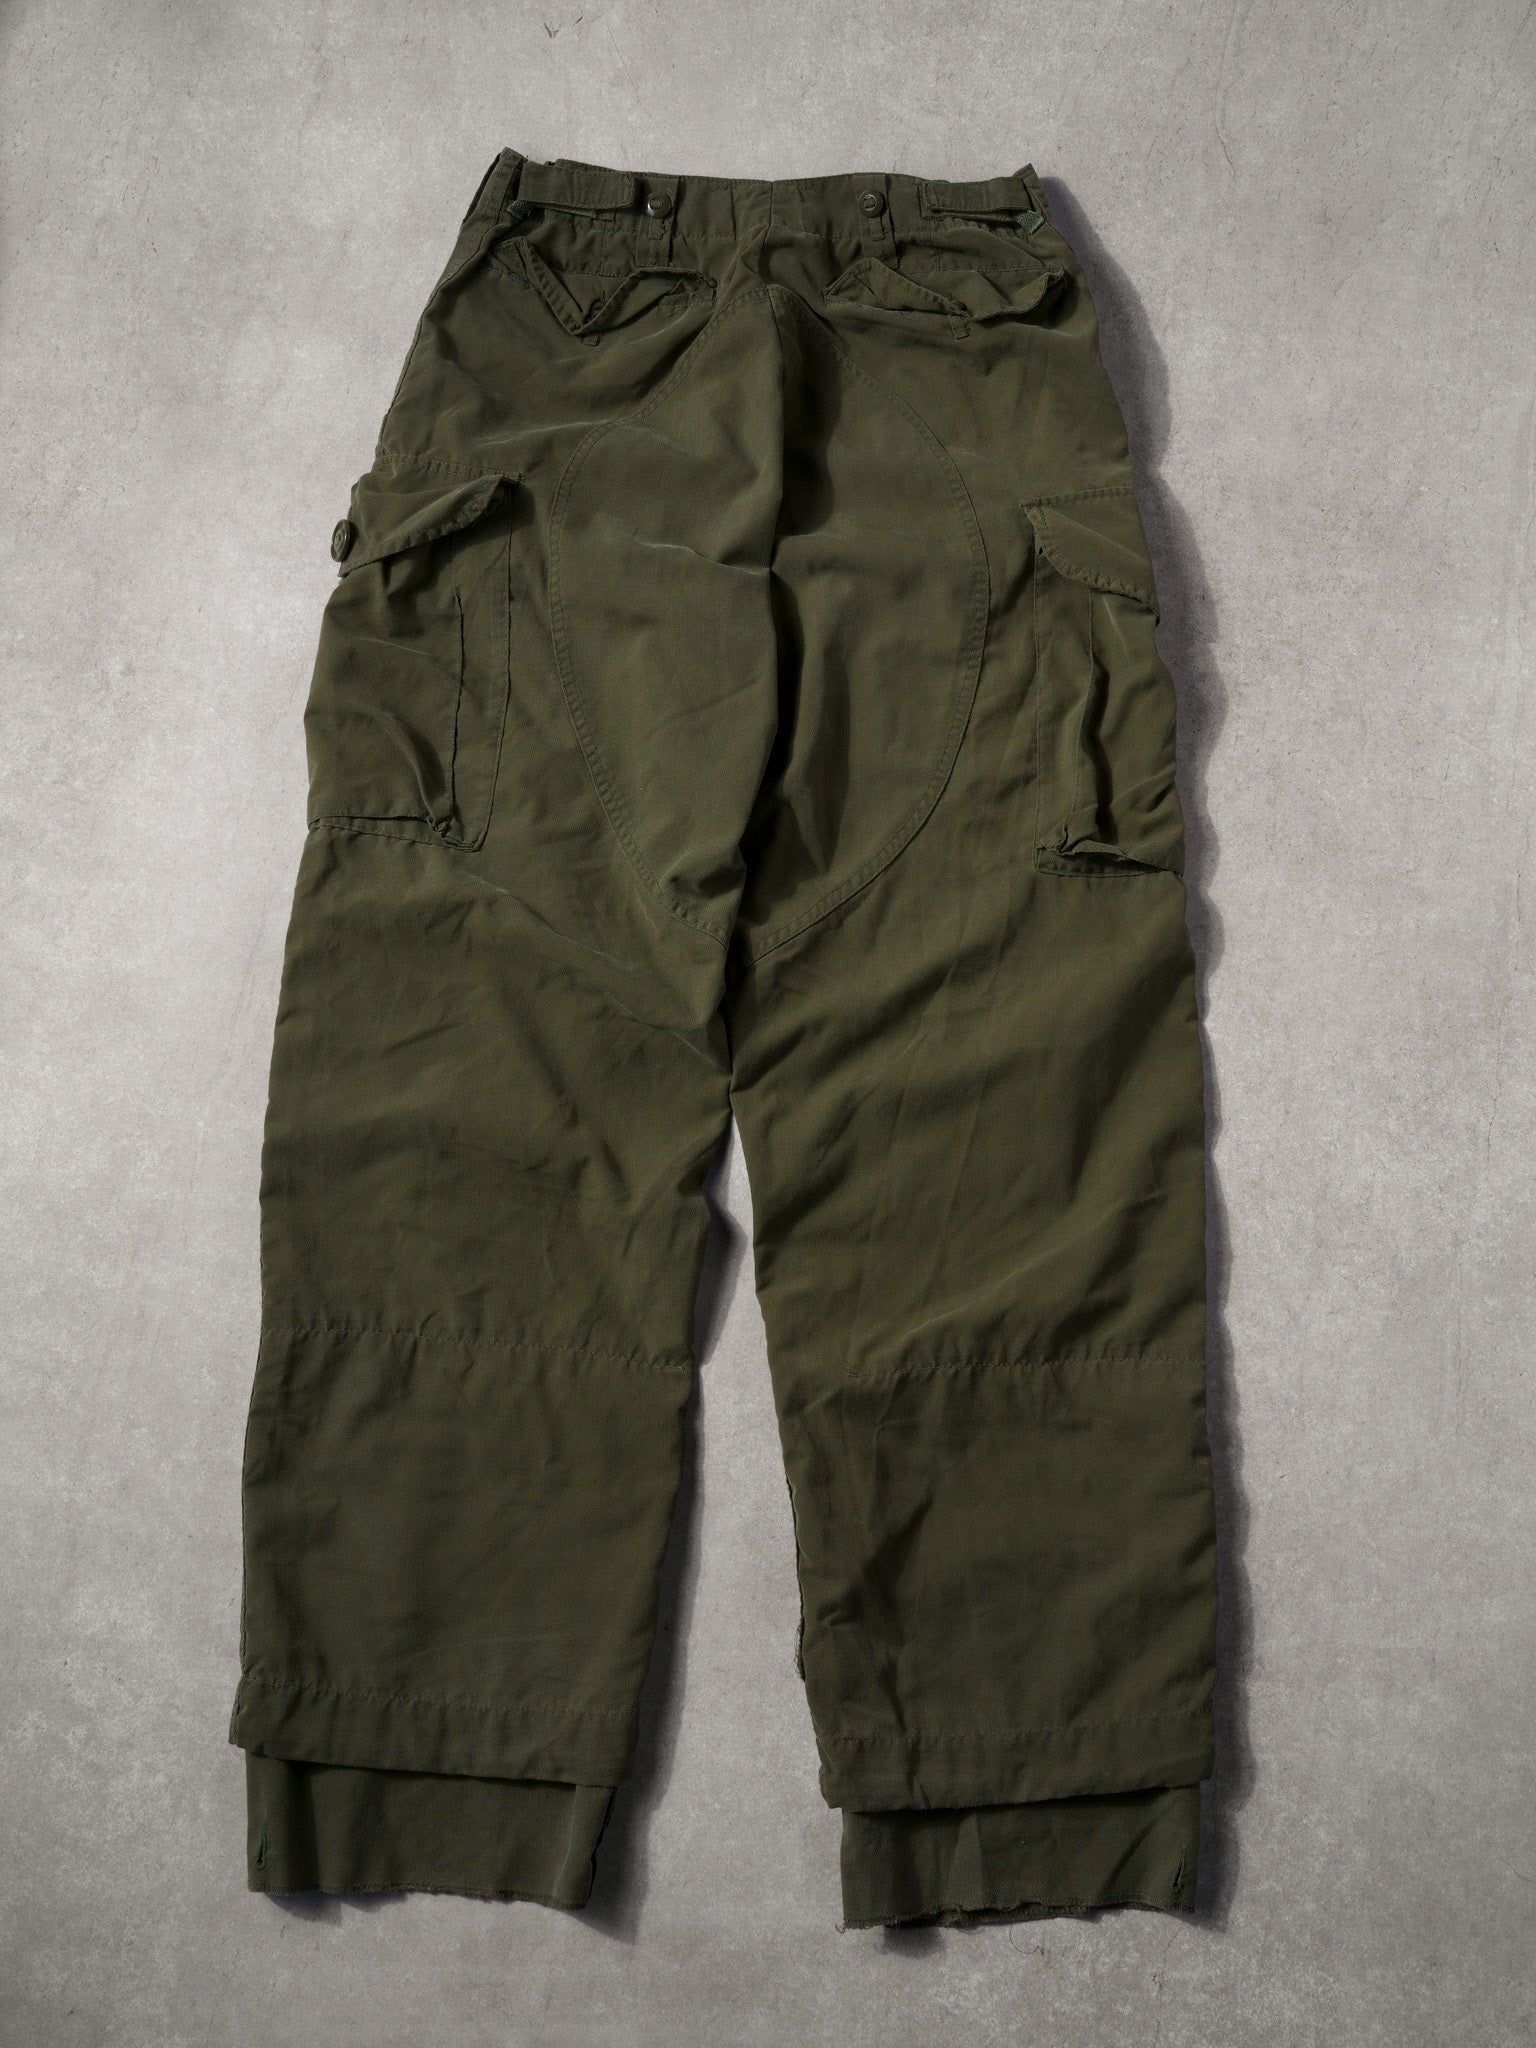 Vintage 80s Green Army Parachute Pants (34x34)